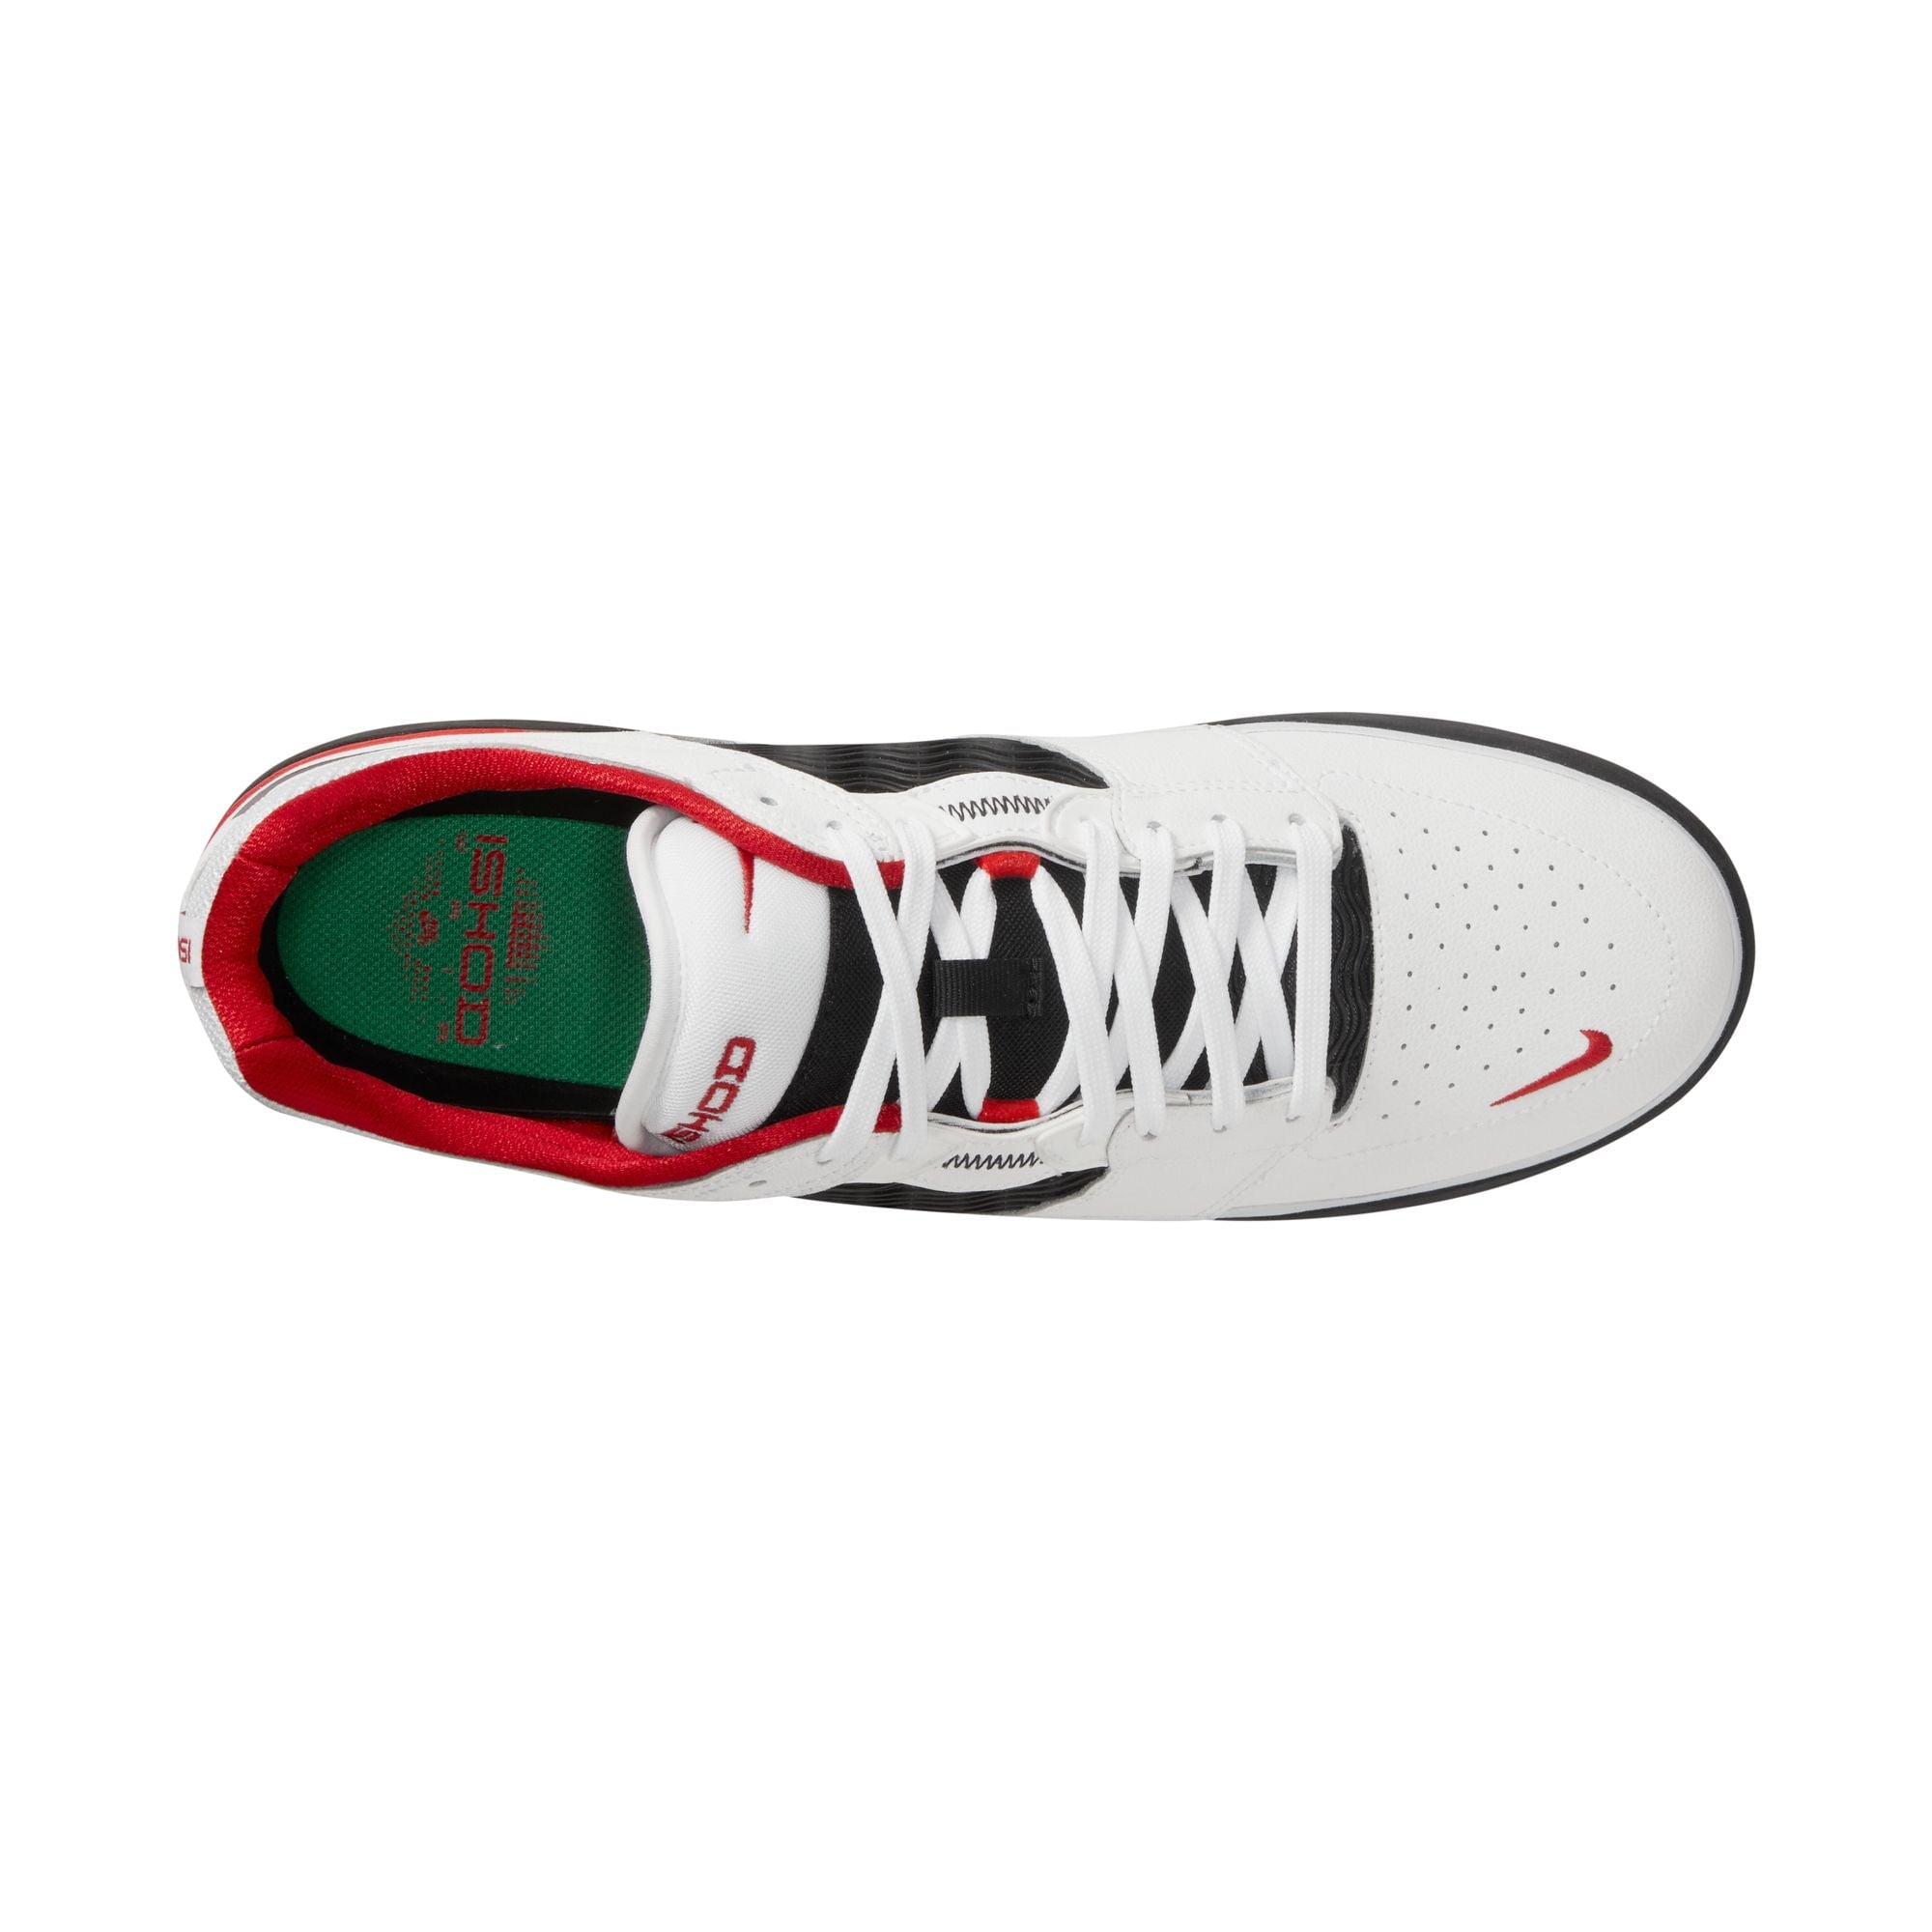 Nike SB Ishod Wair Premium Sneaker Nike Skateboarding 